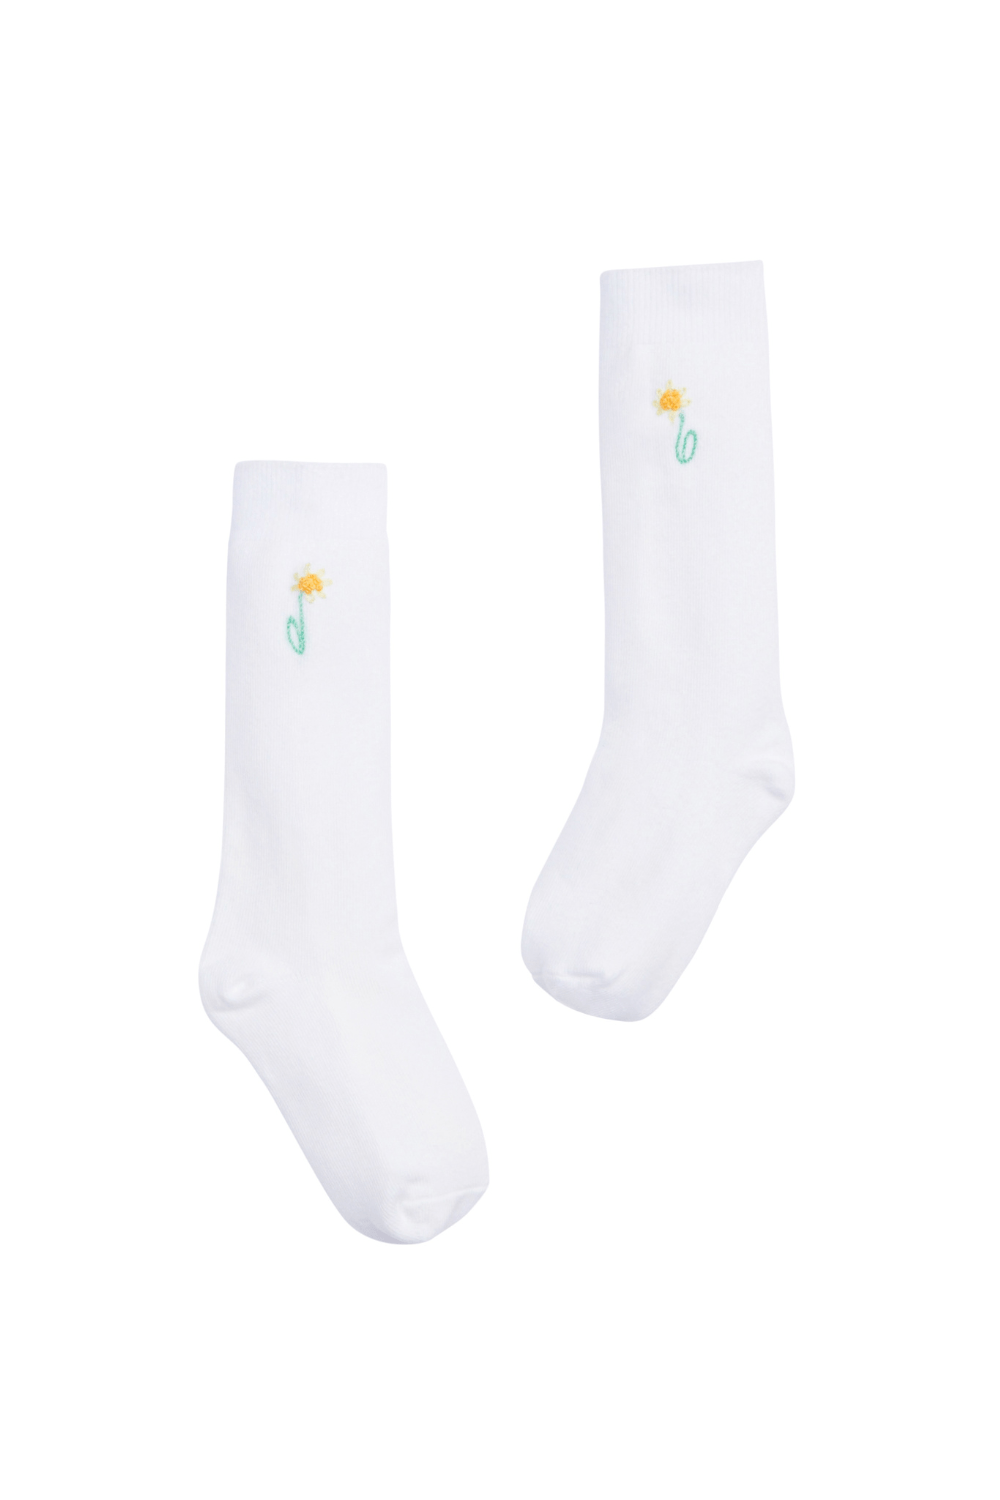 seguridadindustrialcr embroidered knee high socks with daffodils